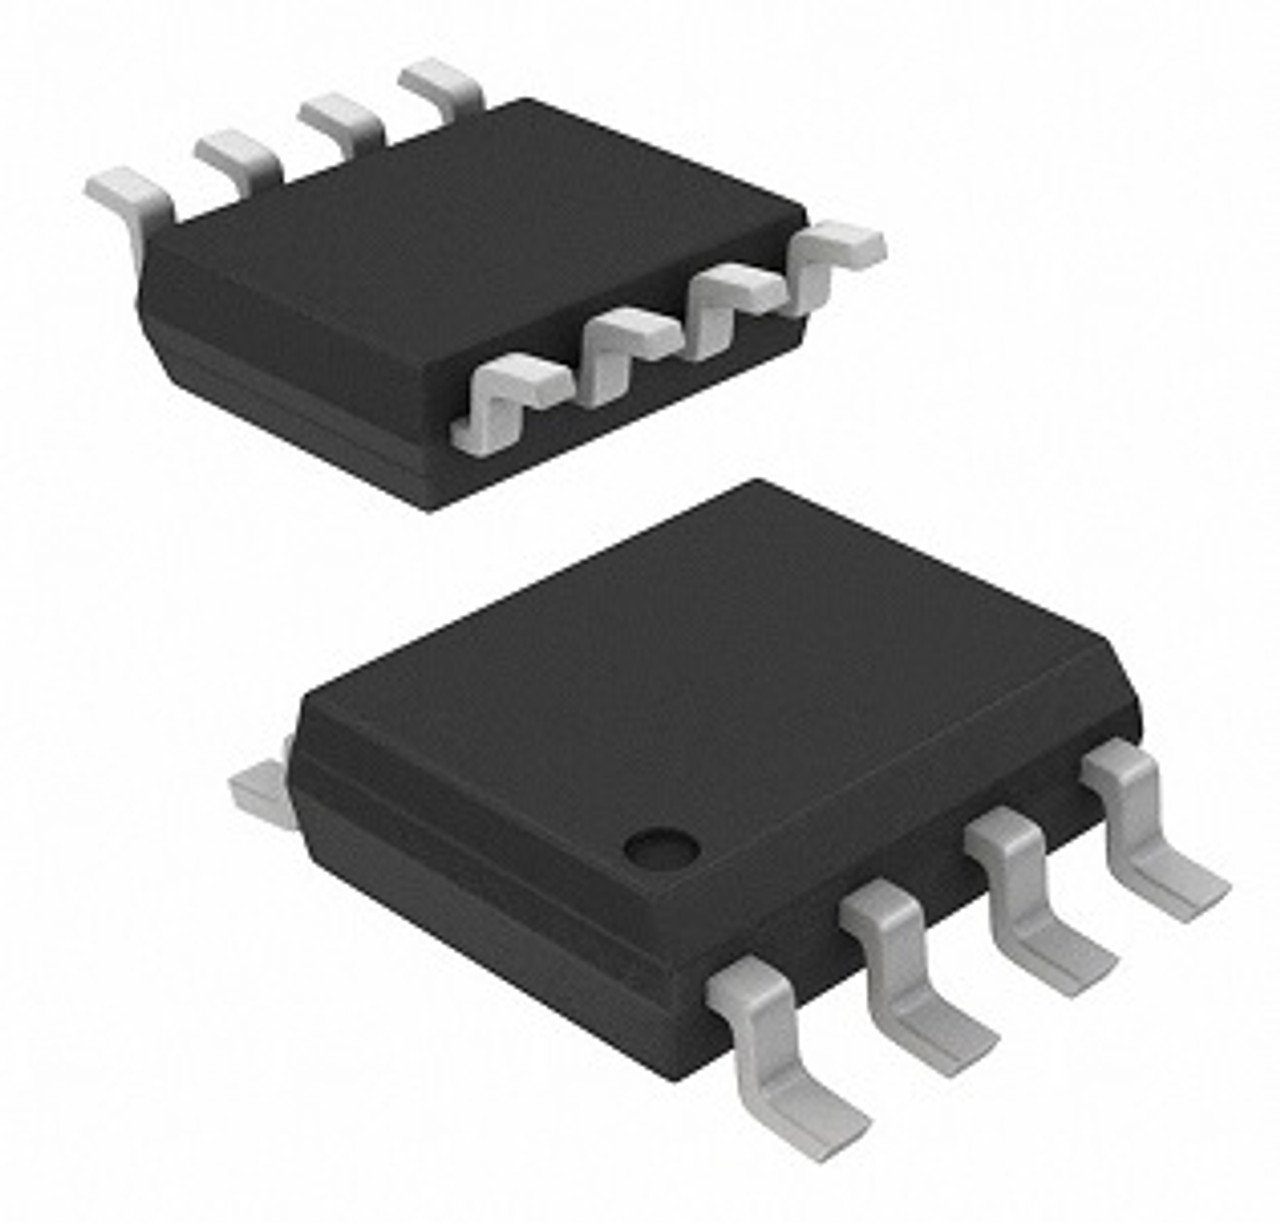 MCP617 ; Micropower Bi-CMOS OpAmp 2.3V to 5.5V, SOIC-8